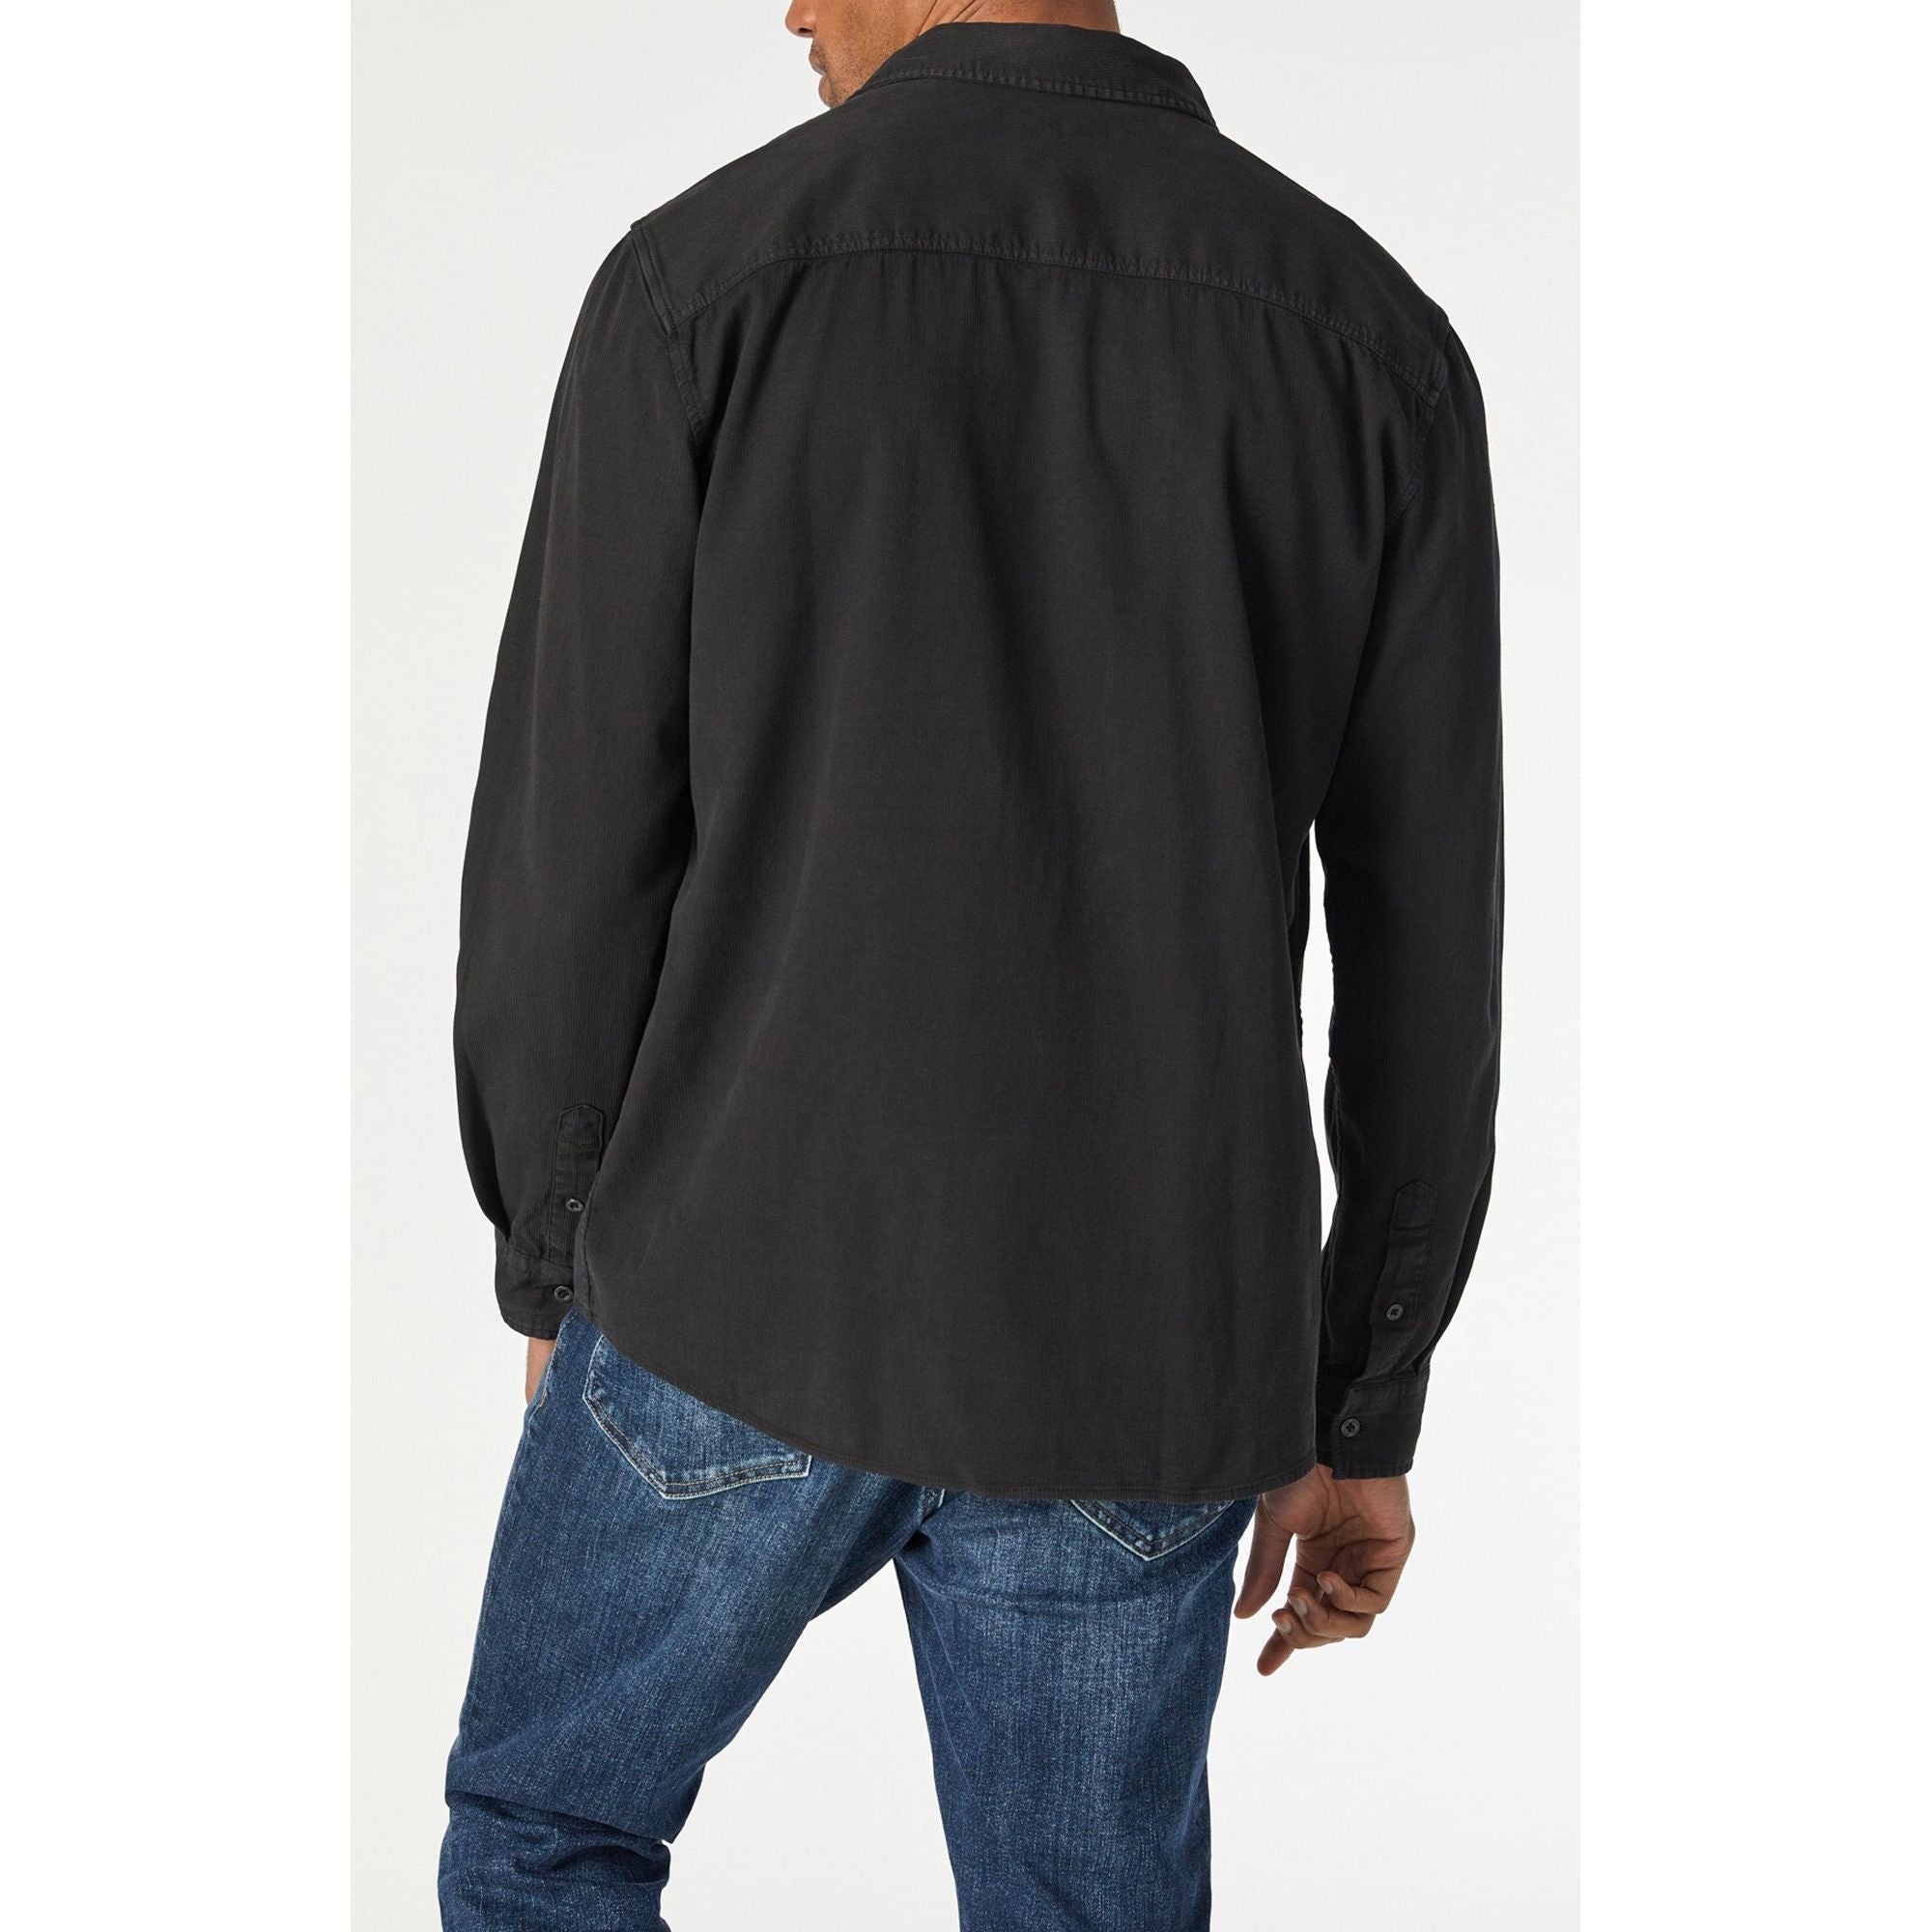 Mavi - Button Up Shirt in Black-SQ0921159